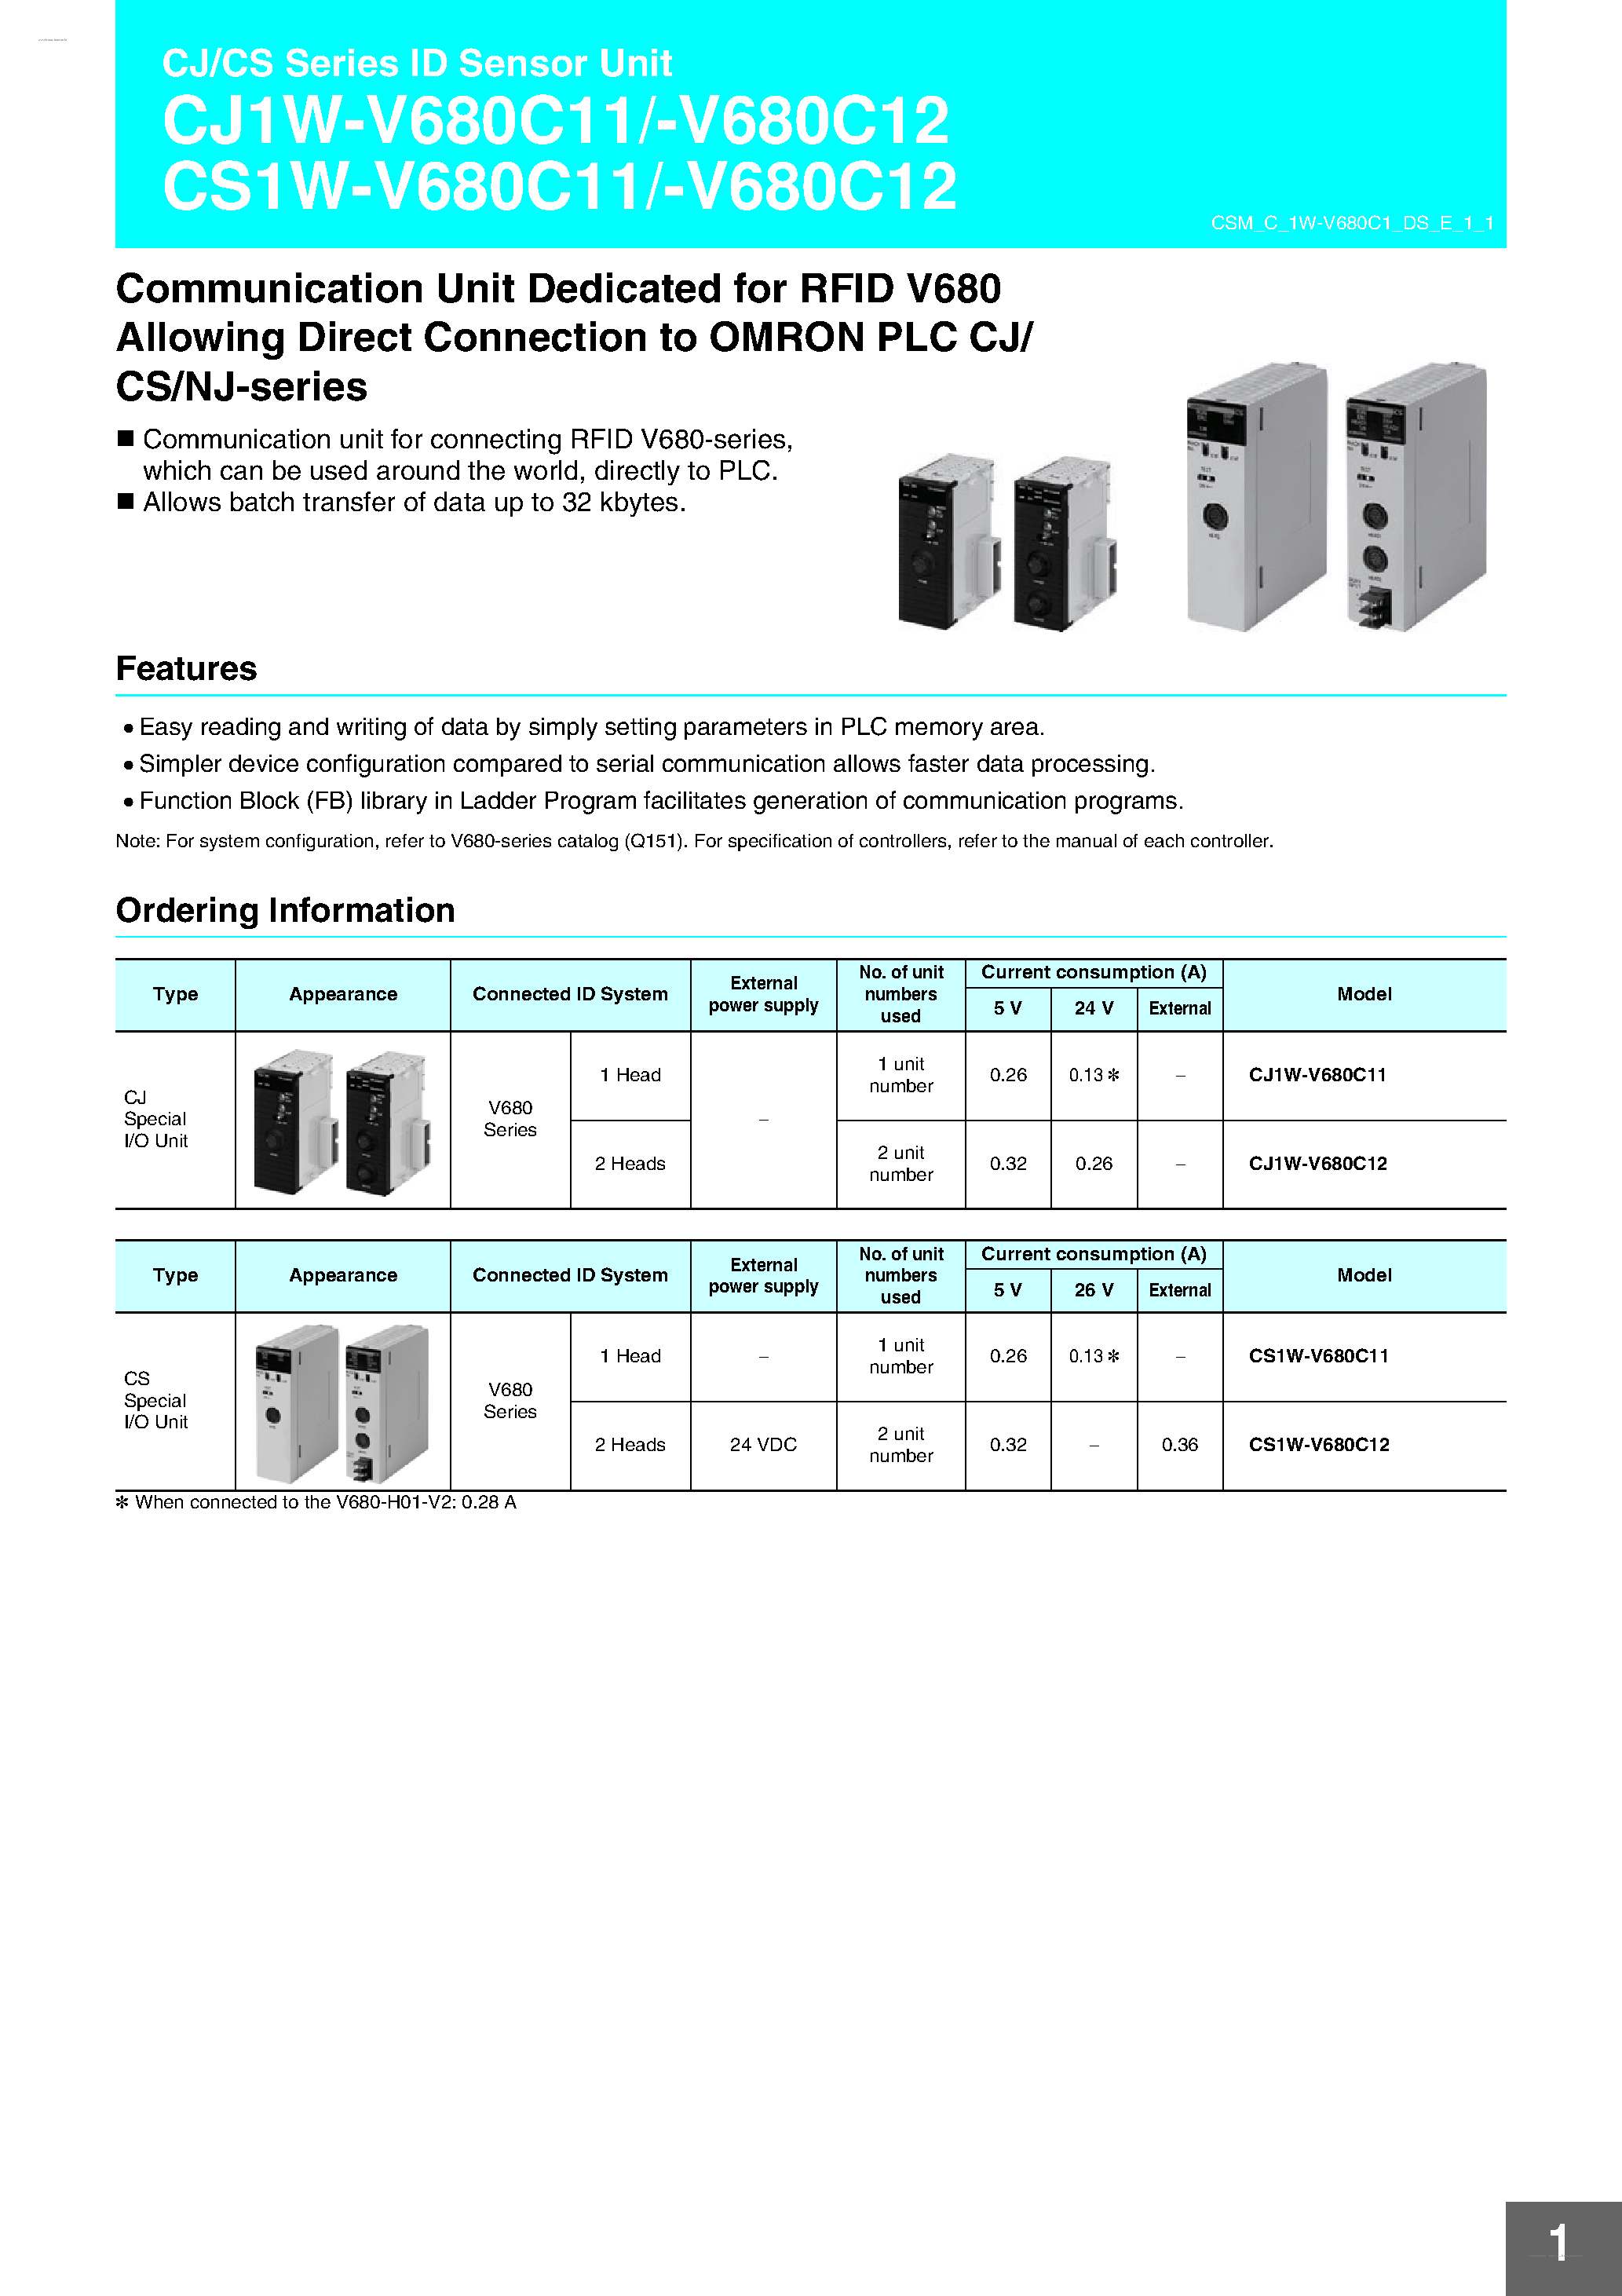 Datasheet CS1W-V680C11 - (CS1W-V680C11 / CS1W-V680C12) CJ/CS Series ID Sensor Unit page 1